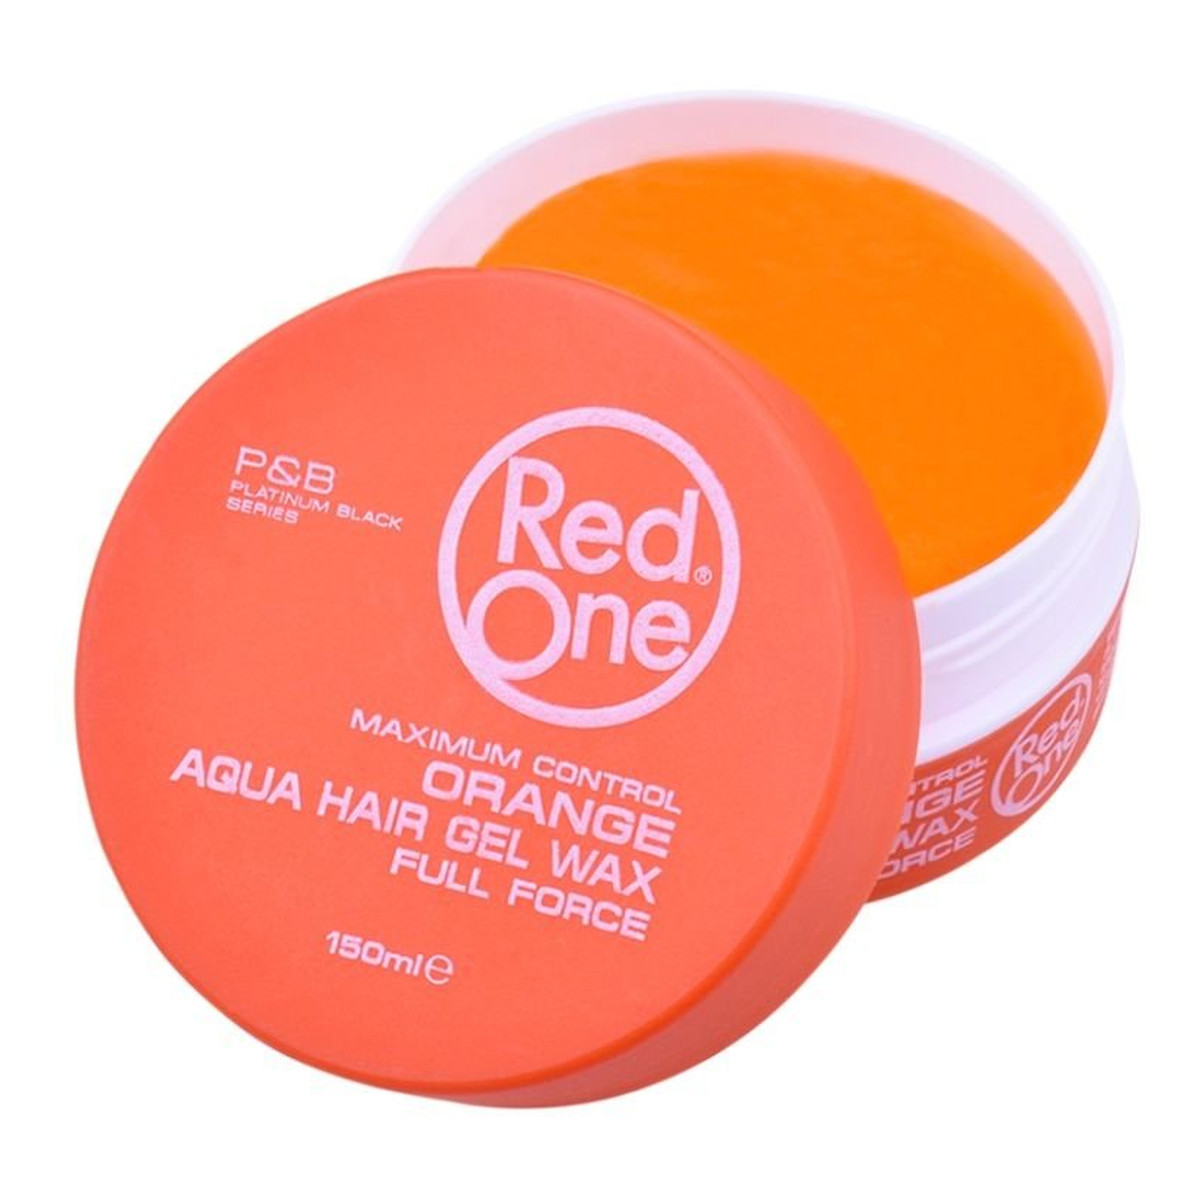 Red One Aqua hair gel wax full force wosk do włosów orange 150ml